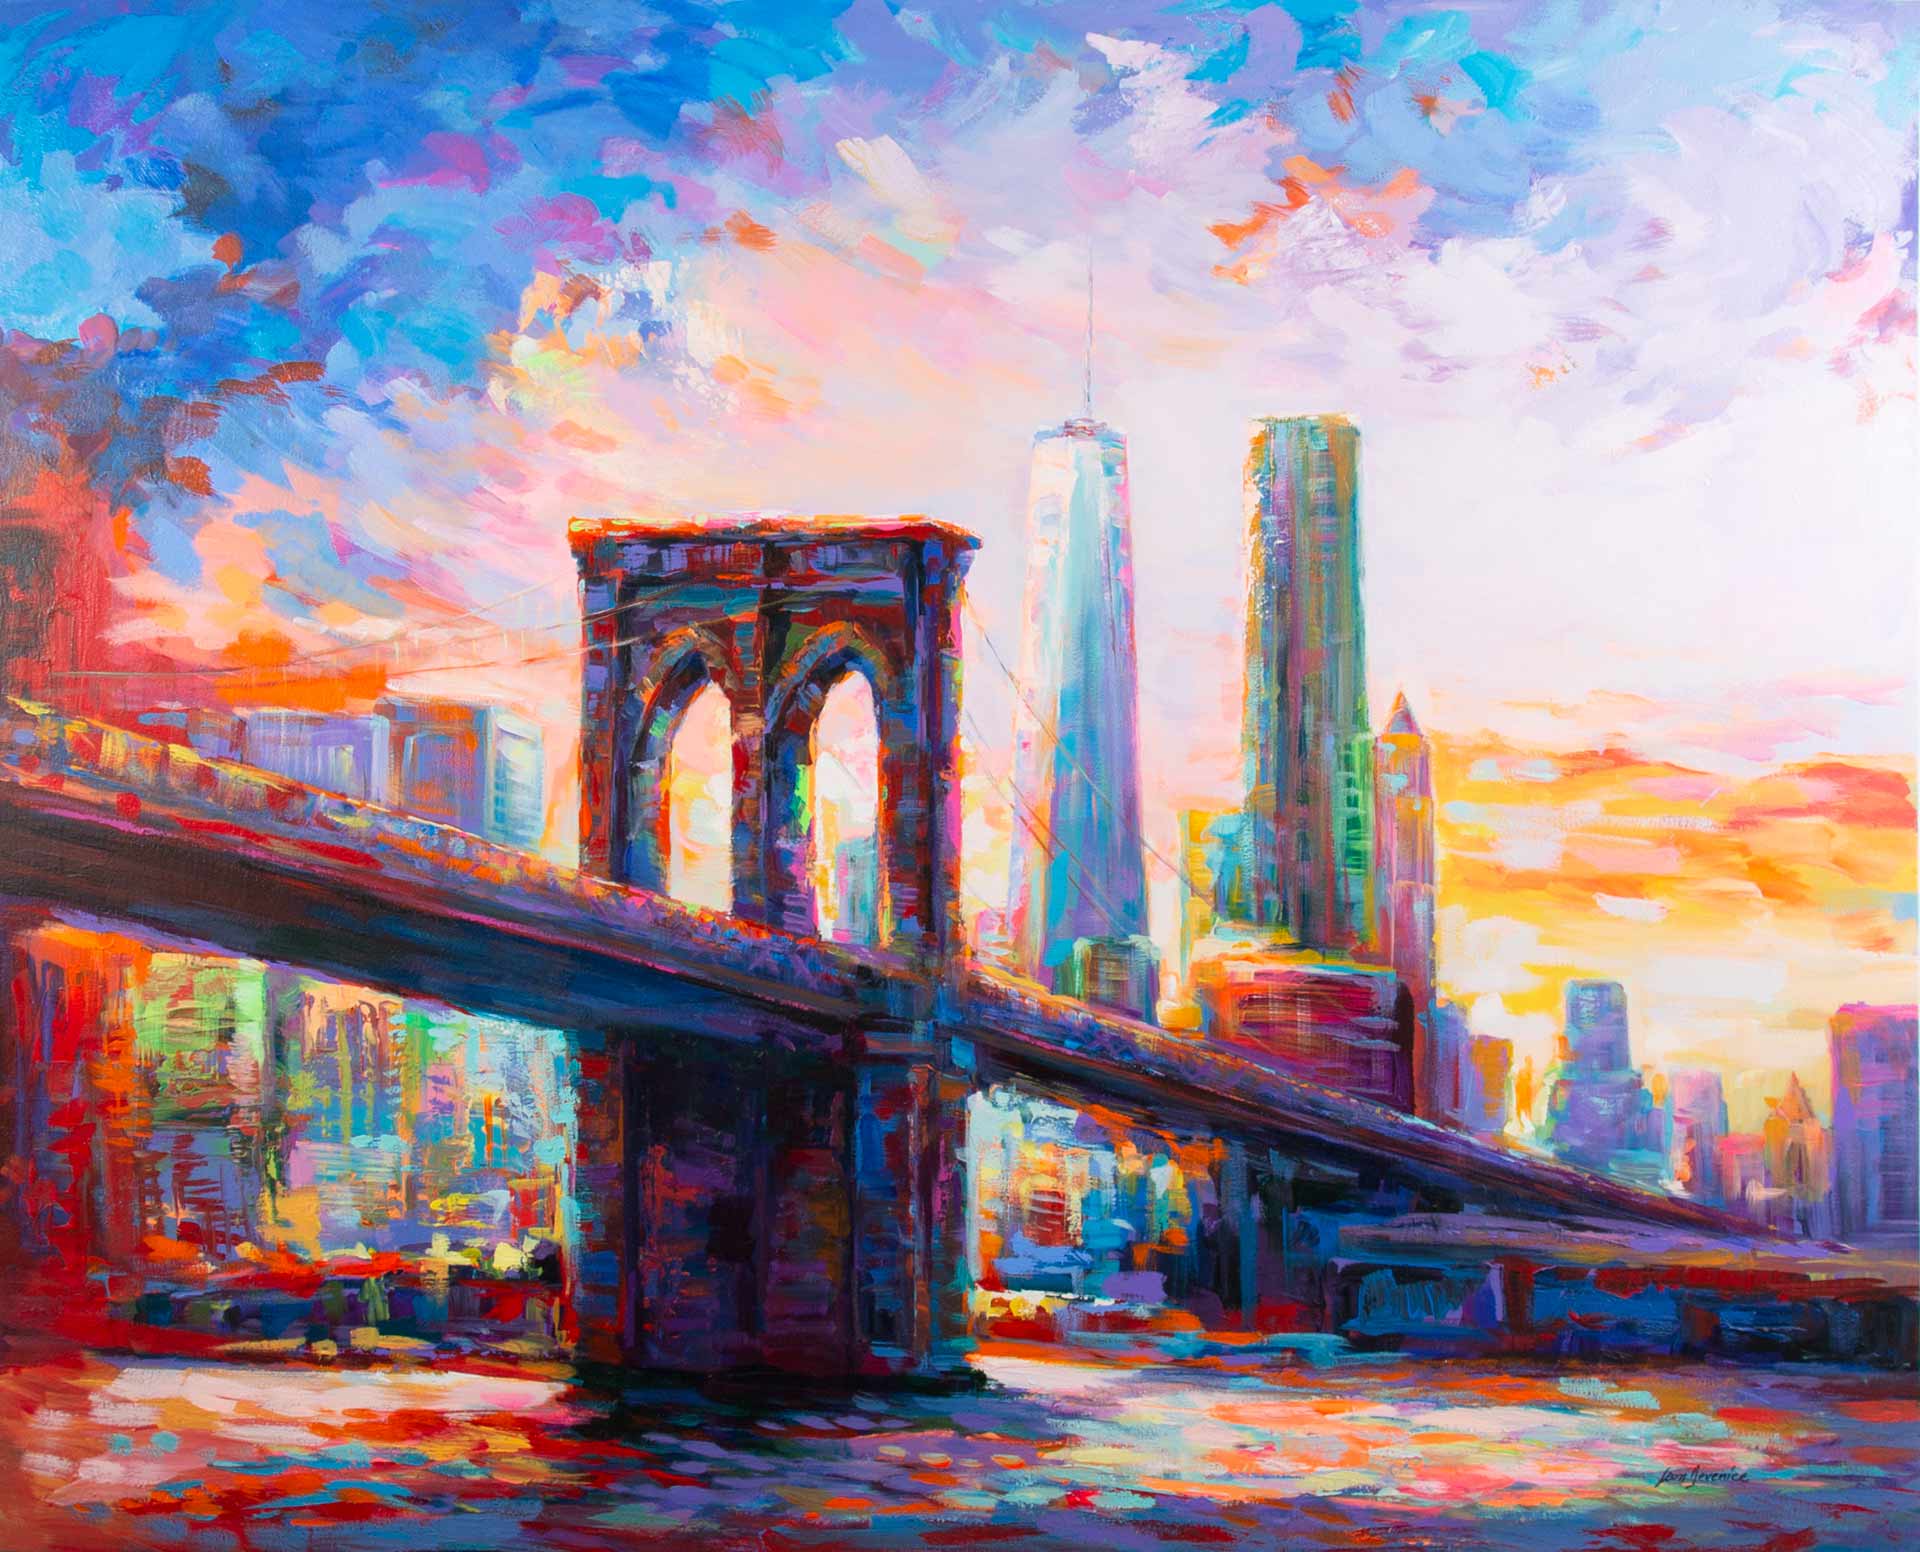 Brooklyn Bridge, New York City painting 